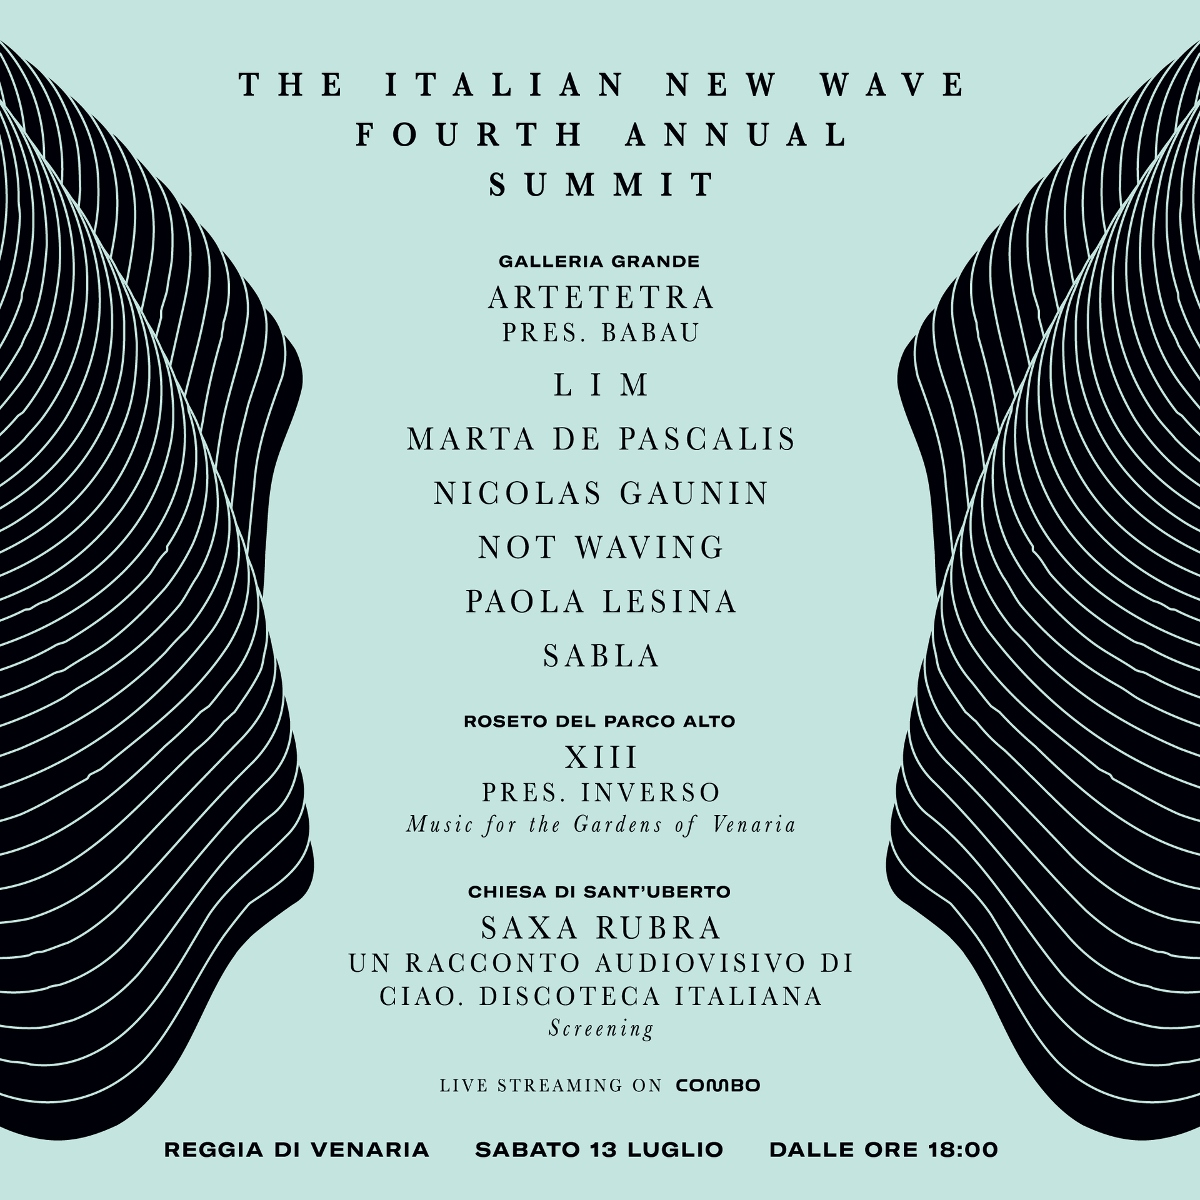 The Italian New Wave Fourth Annual Summit